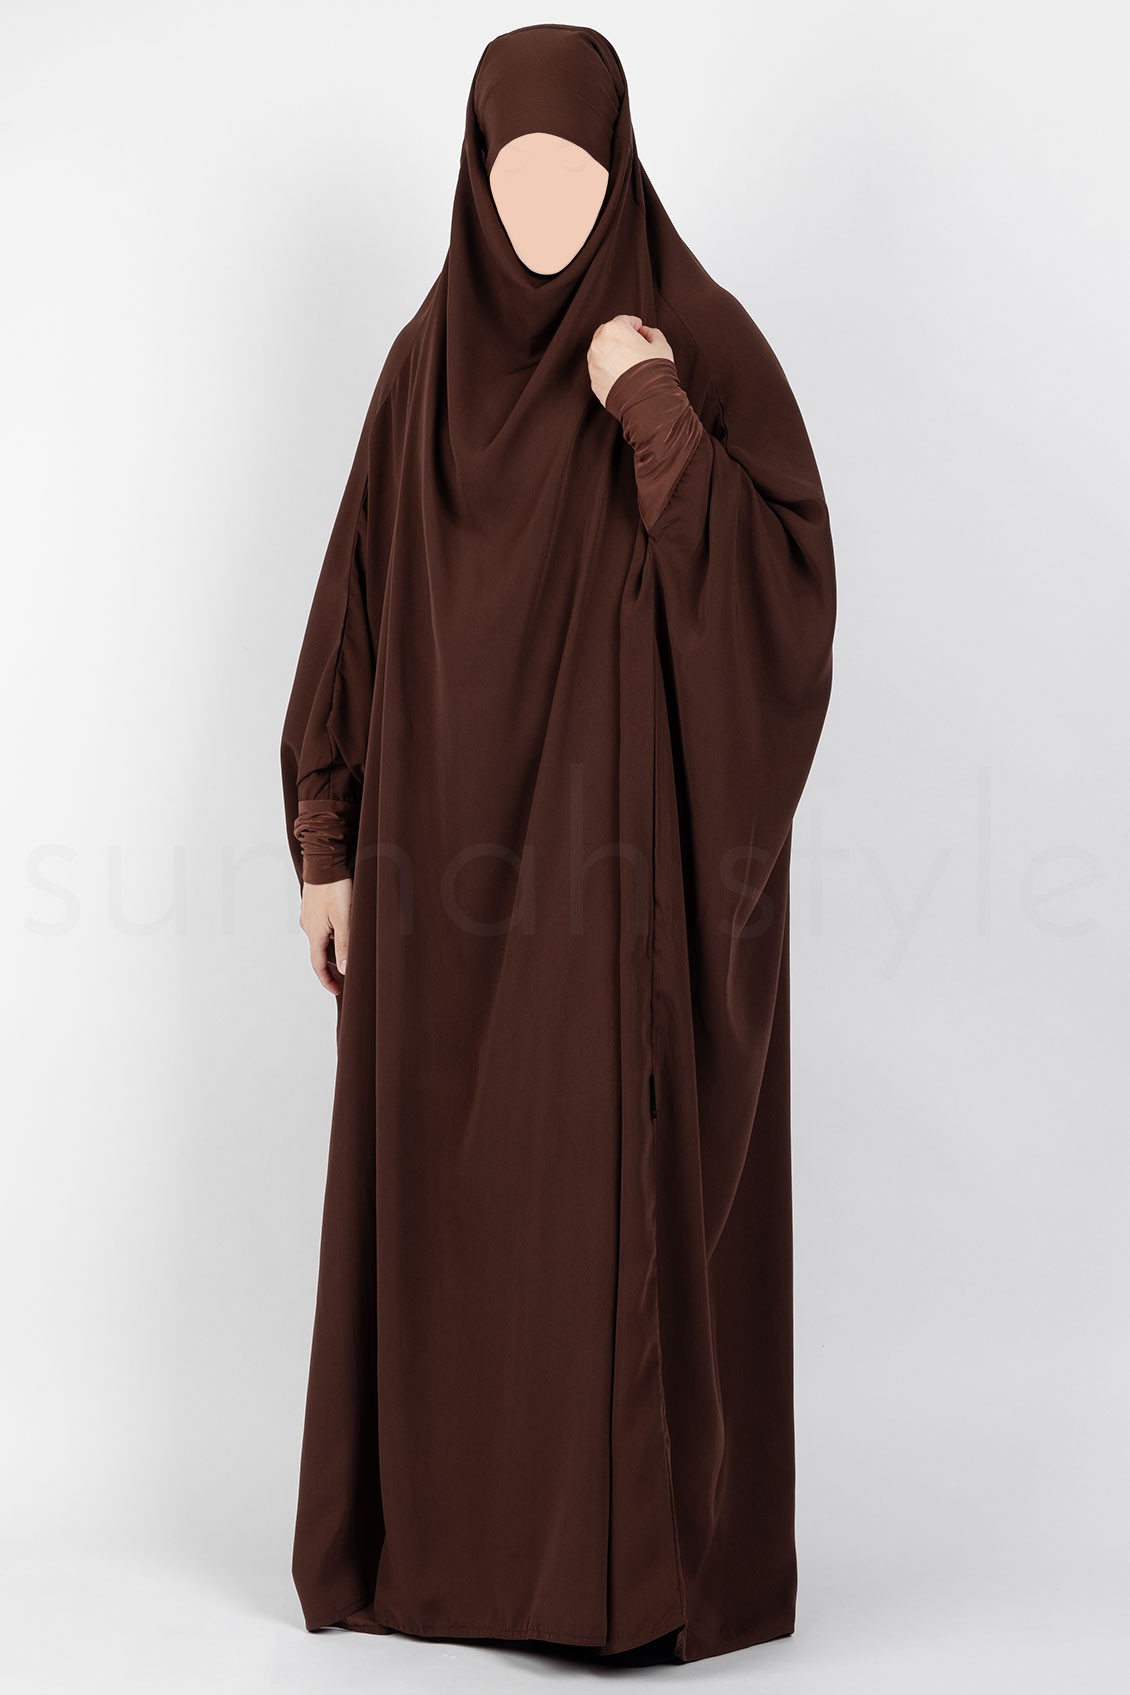 Sunnah Style Plain Full Length Jilbab Chocolate